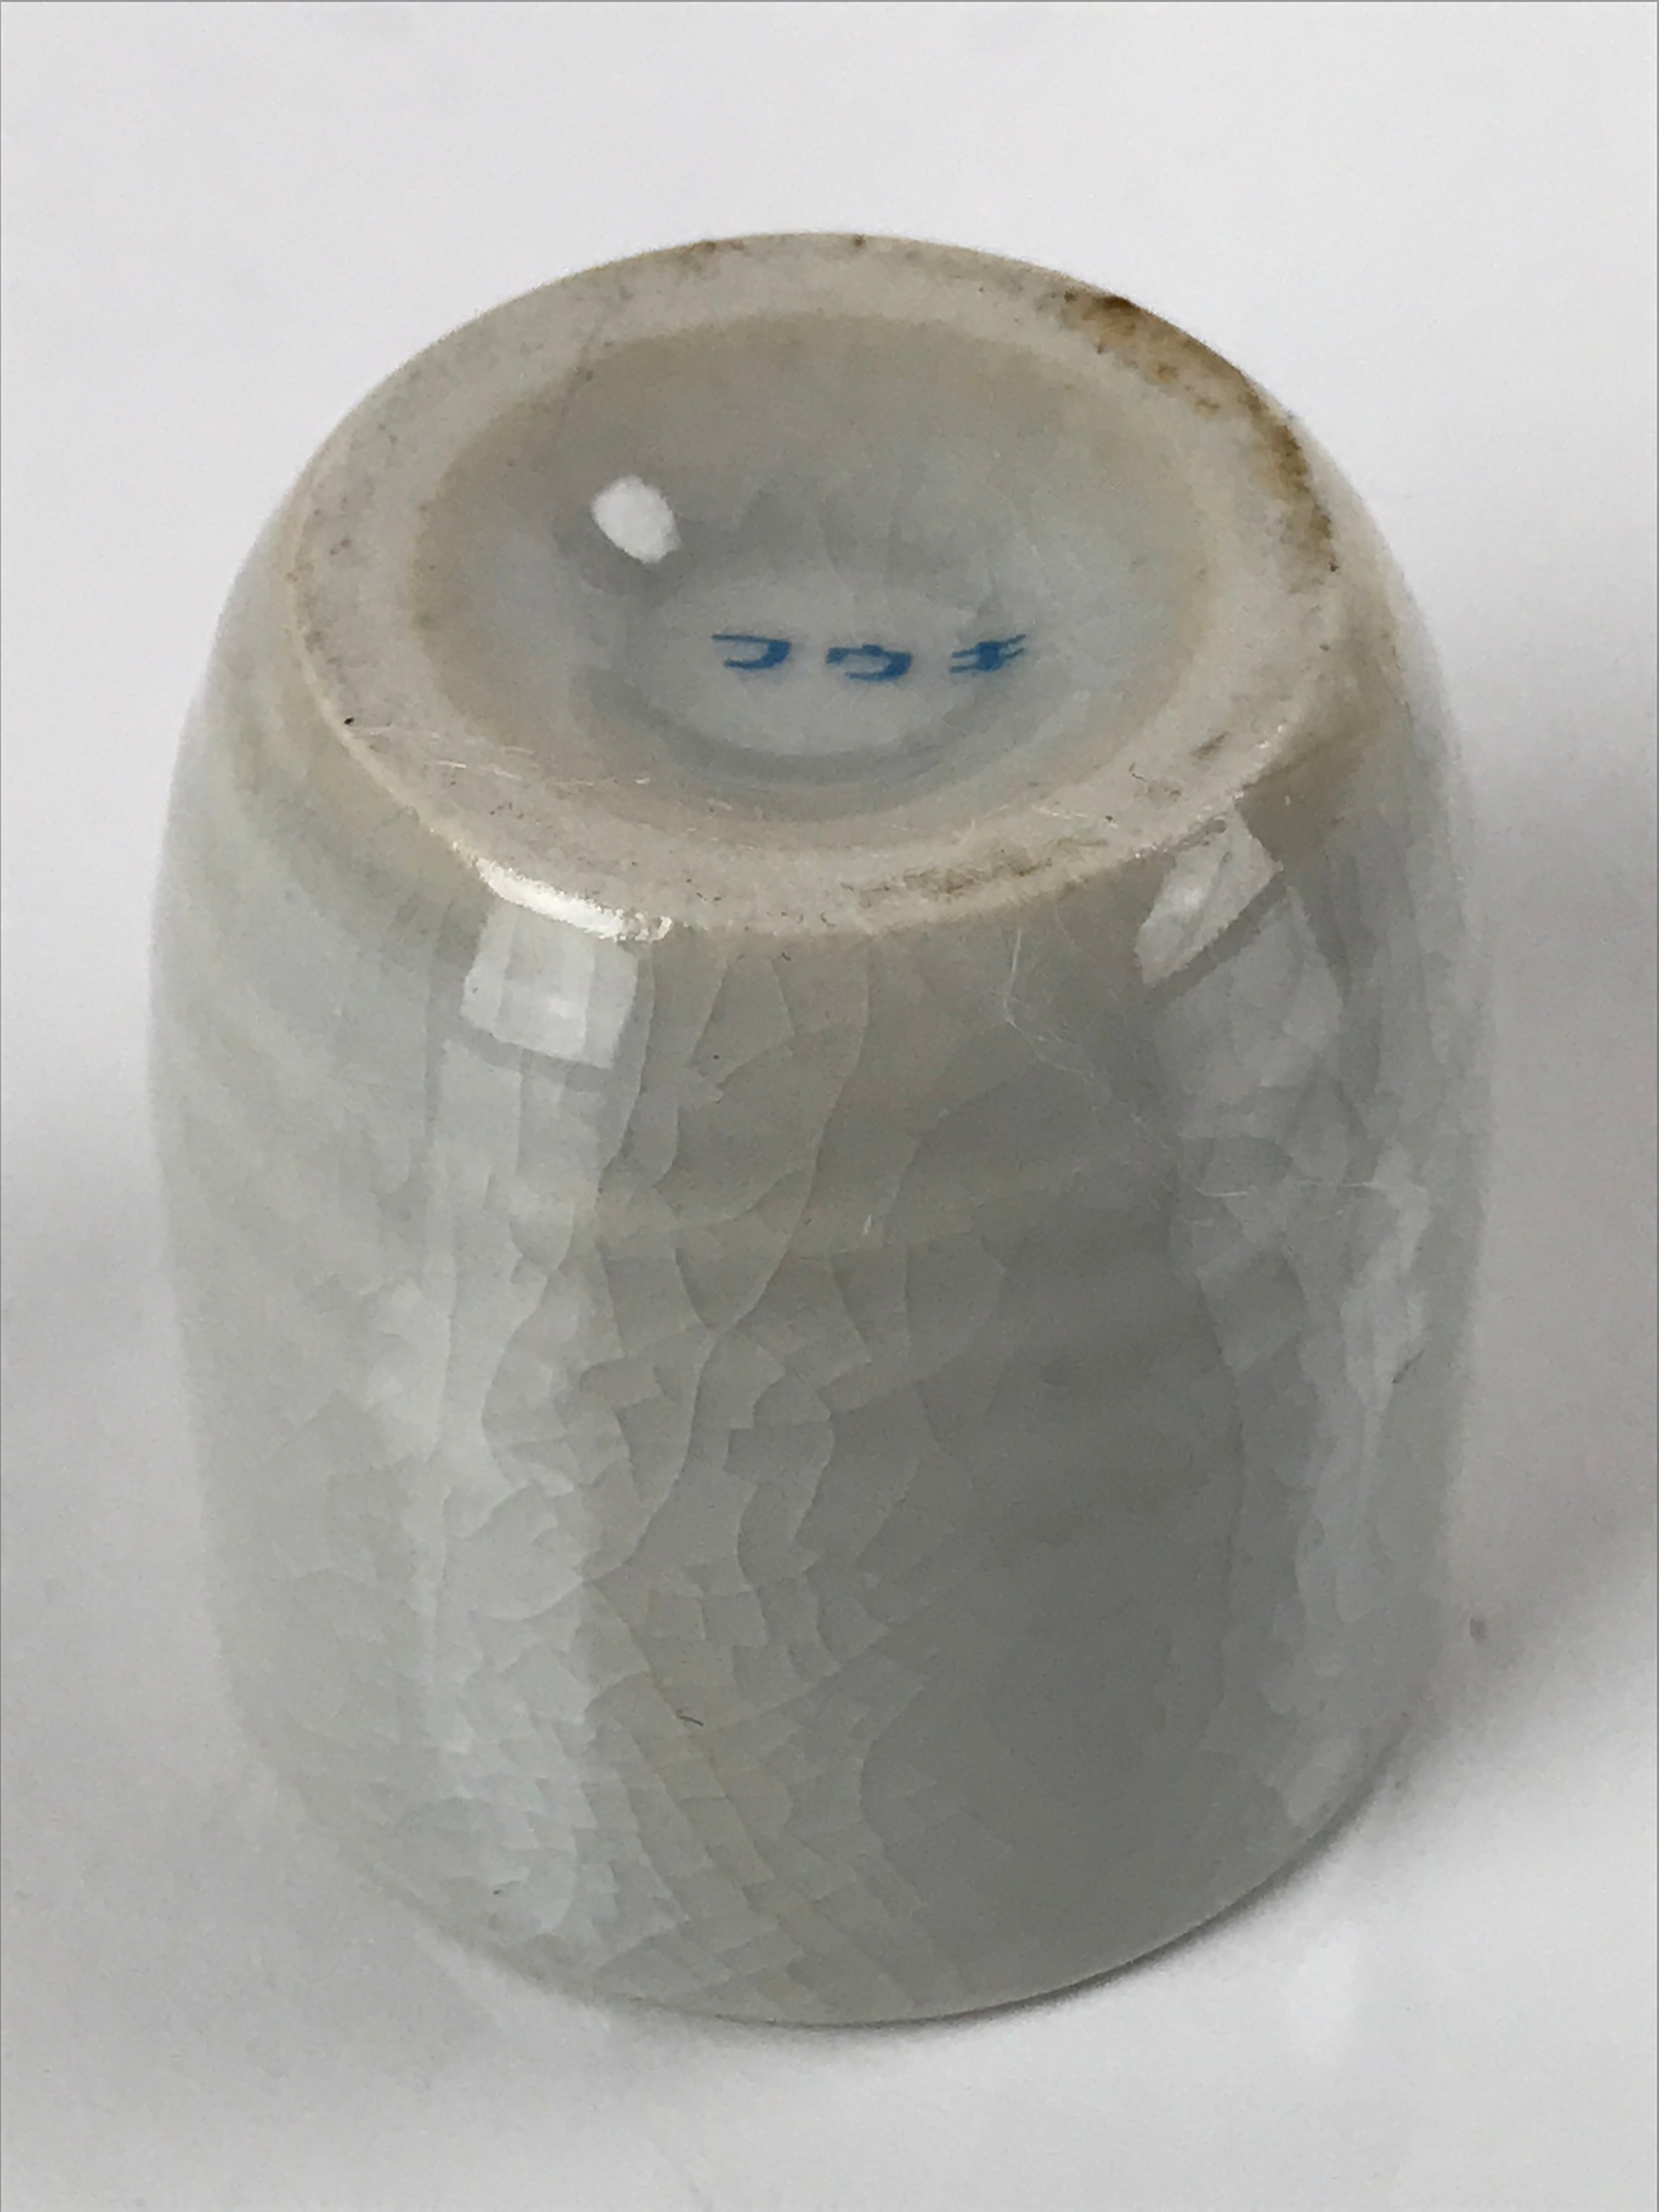 Japanese Ceramic Sake Cup Vtg Tsubomi Ochoko Guinomi Simple Plain Gray G178